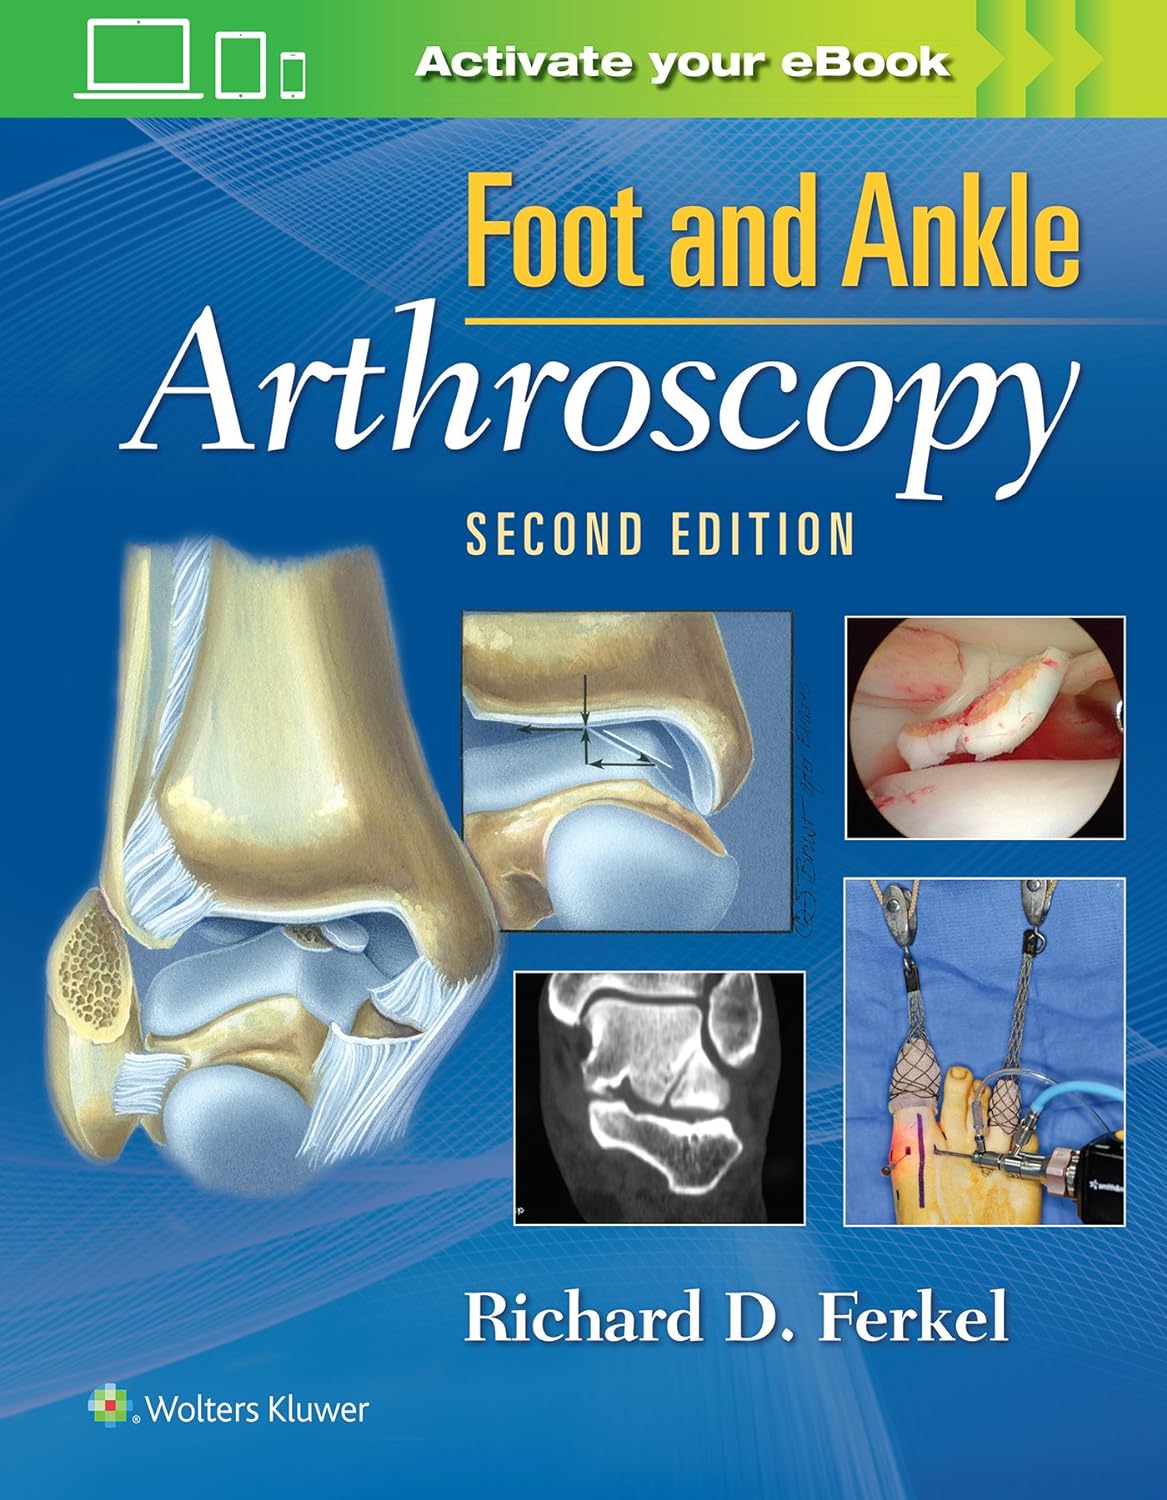 Foot ＆amp; Ankle Arthroscopy, 2nd Edition  by Richard D Ferkel MD